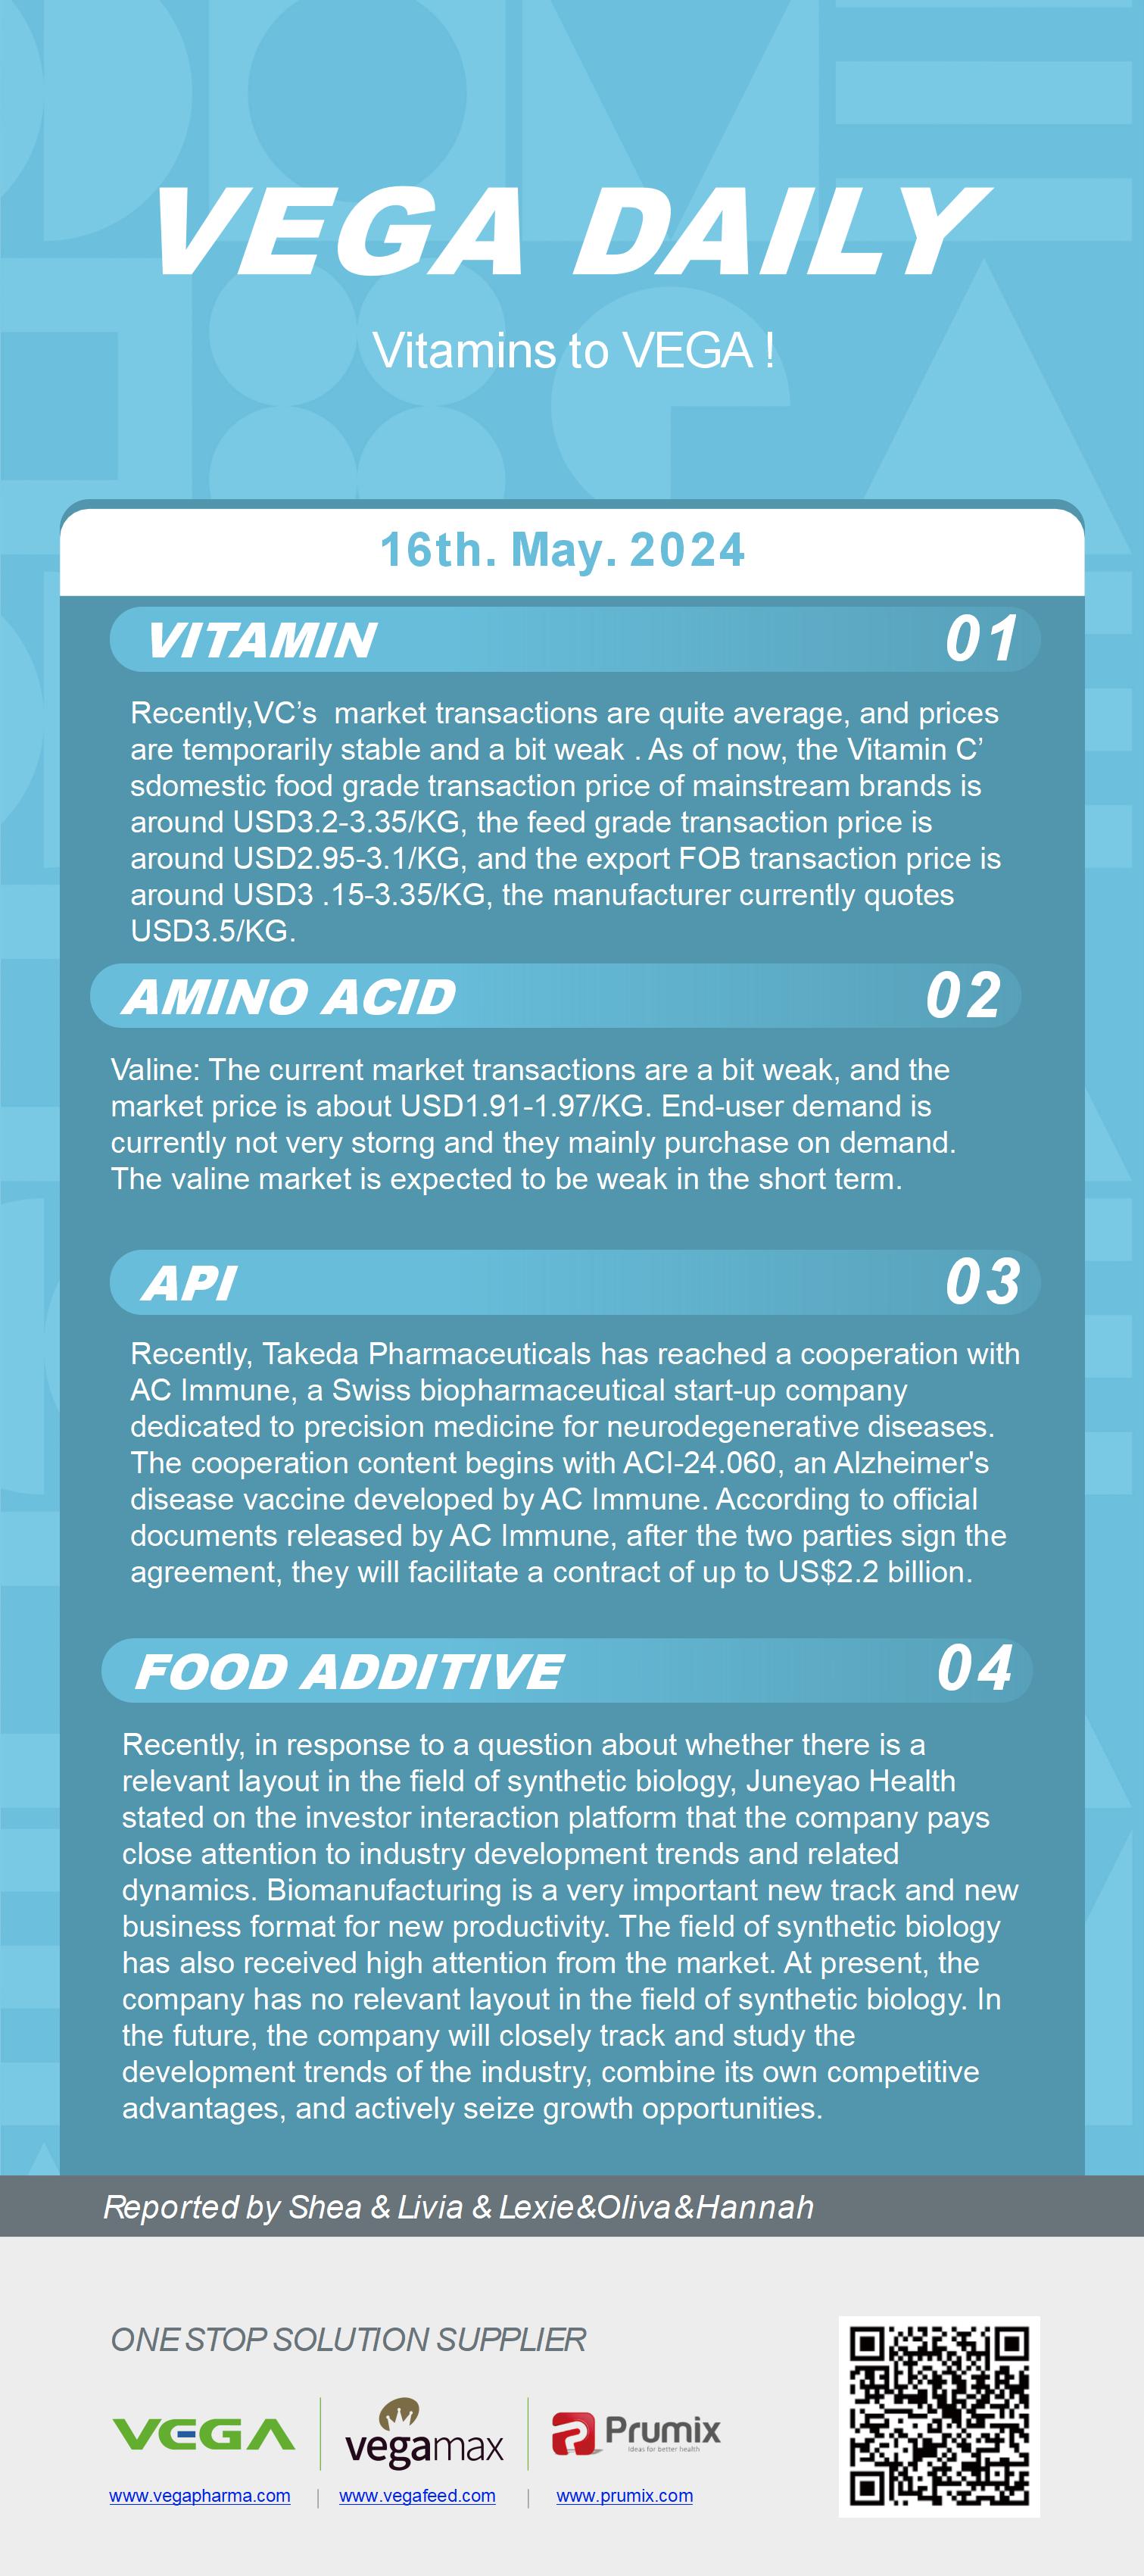 Vega Daily Dated on May 16th 2024 Vitamin Amino Acid APl Food Additives.jpg